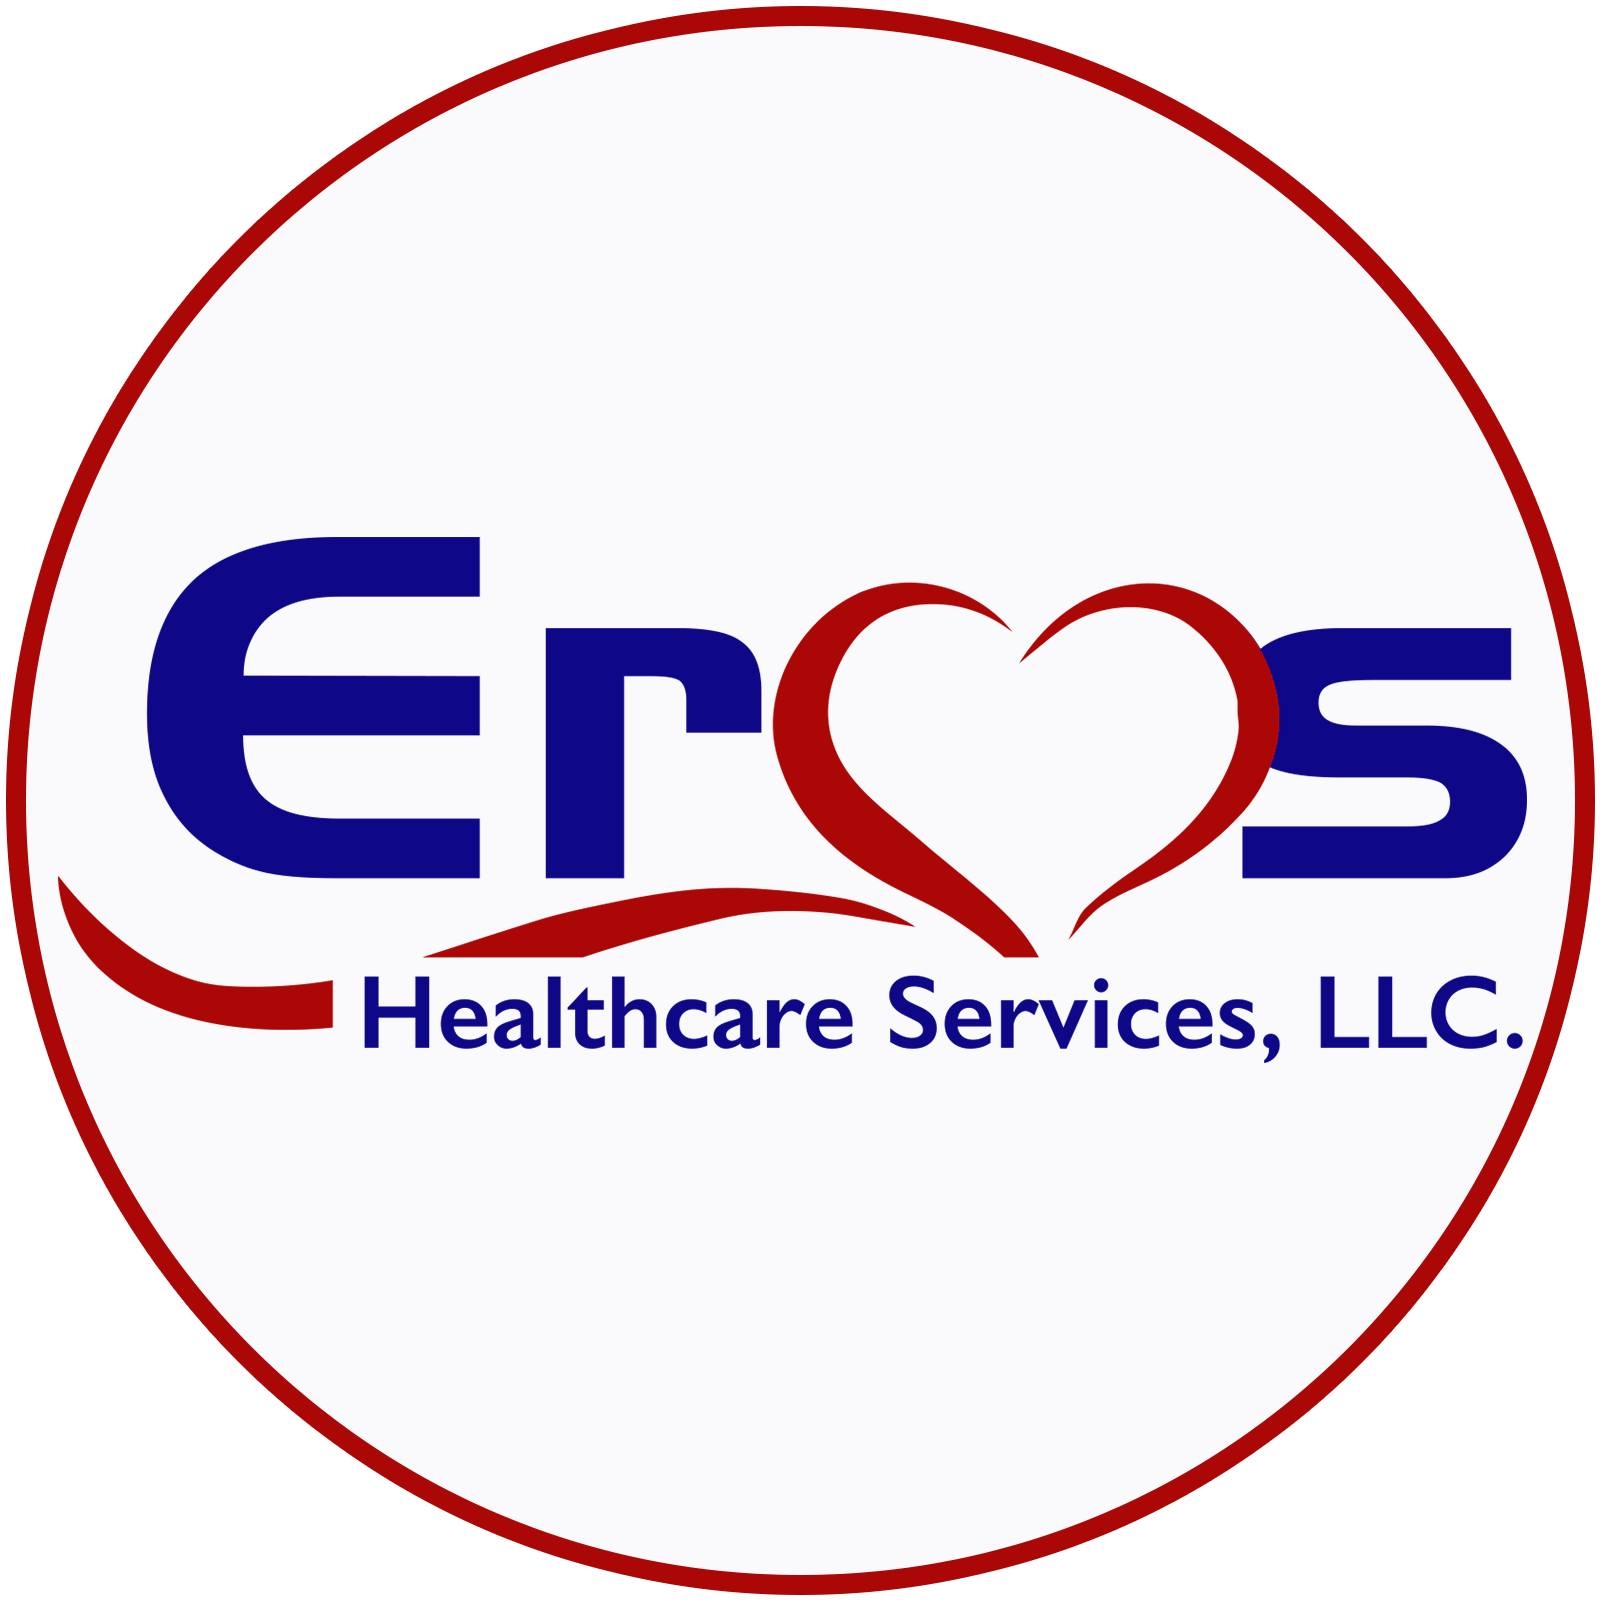 EROS Healthcare Services, LLC